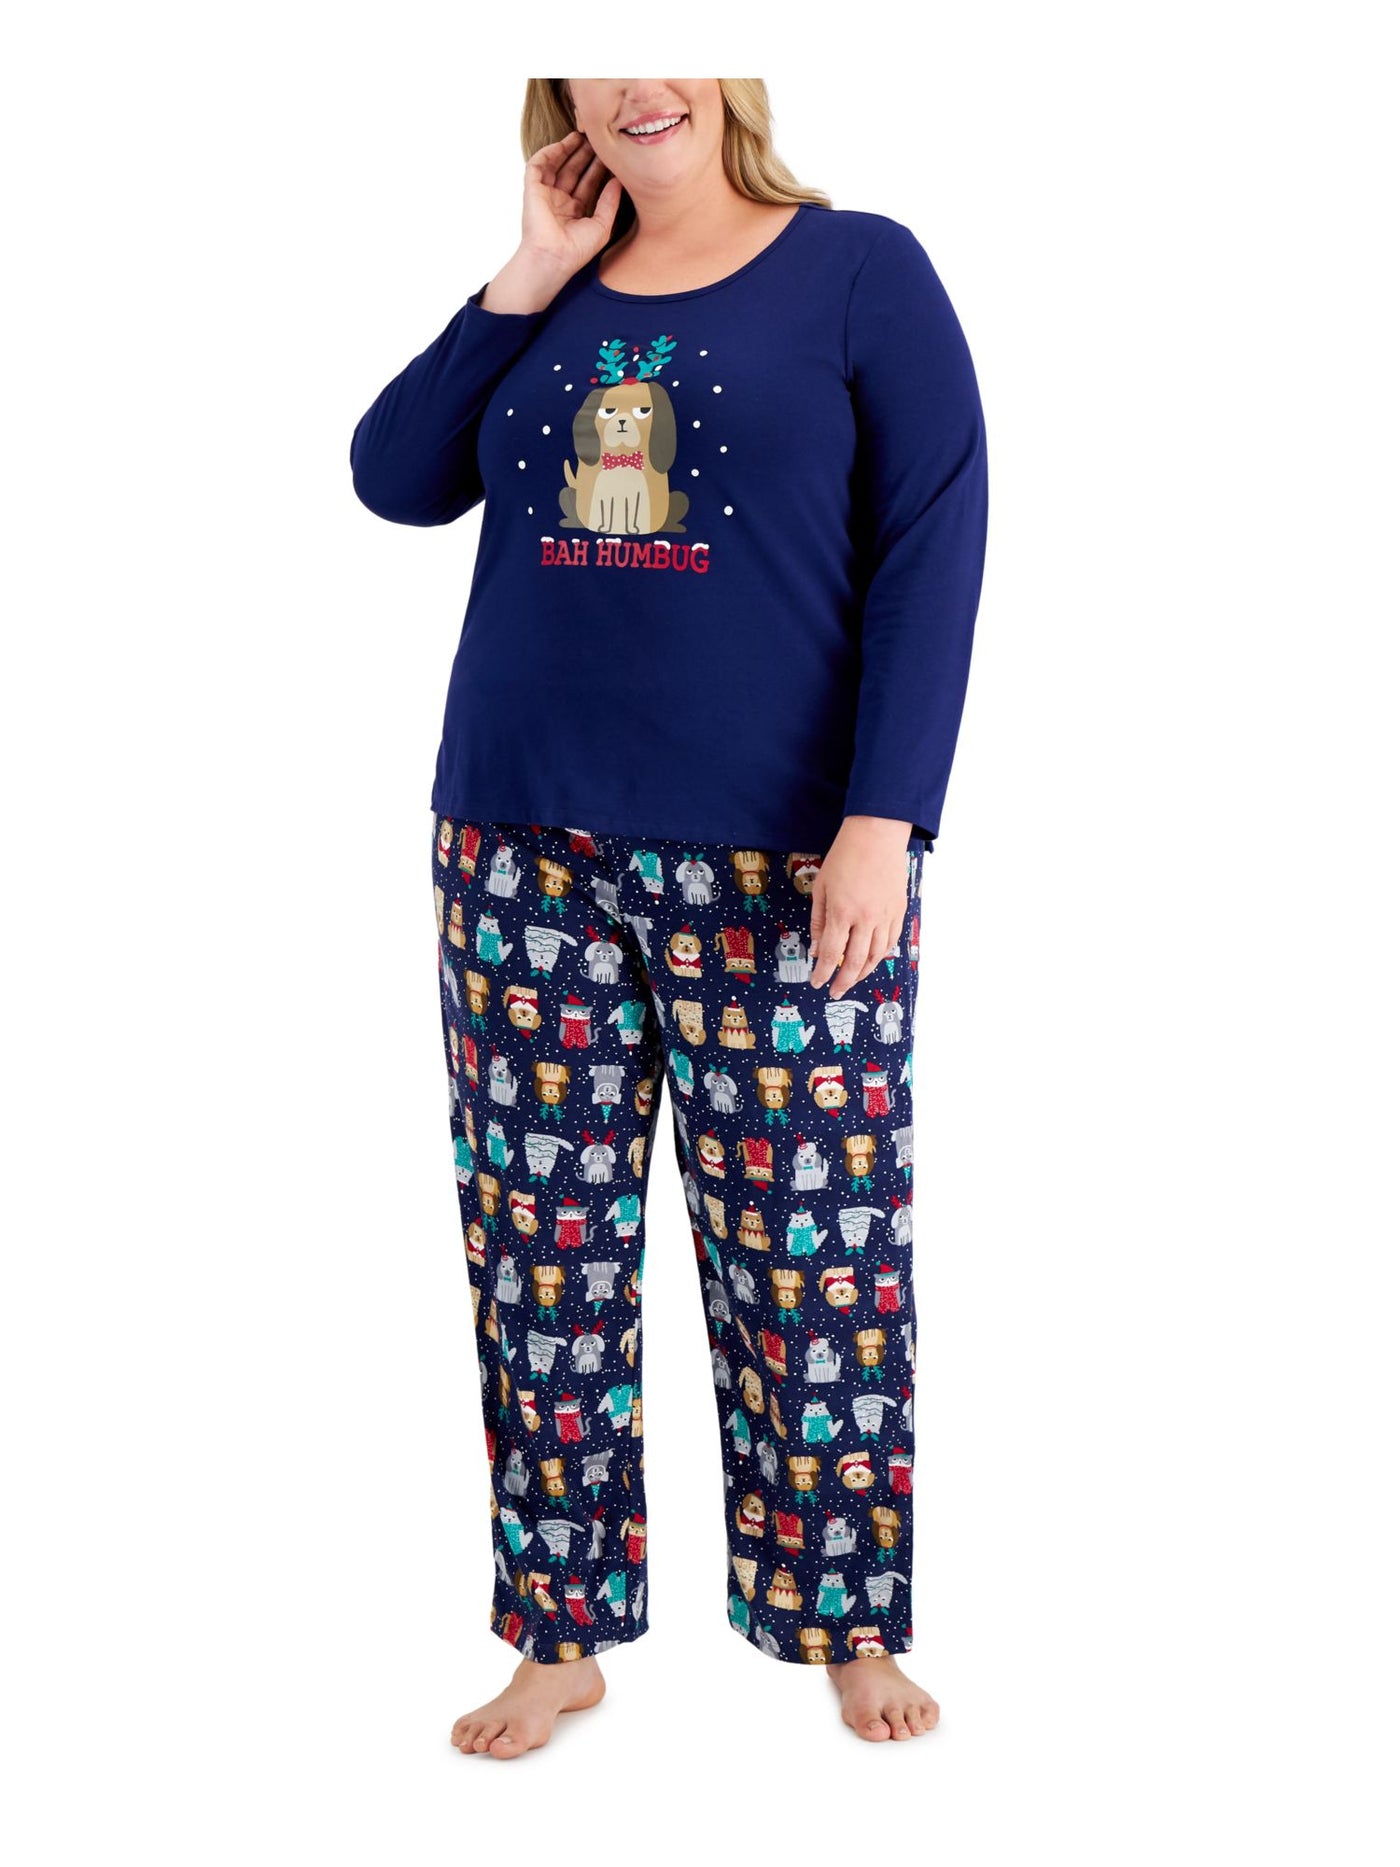 FAMILY PJs Womens Navy Graphic Elastic Band Long Sleeve T-Shirt Top Straight leg Pants Pajamas Plus 1X